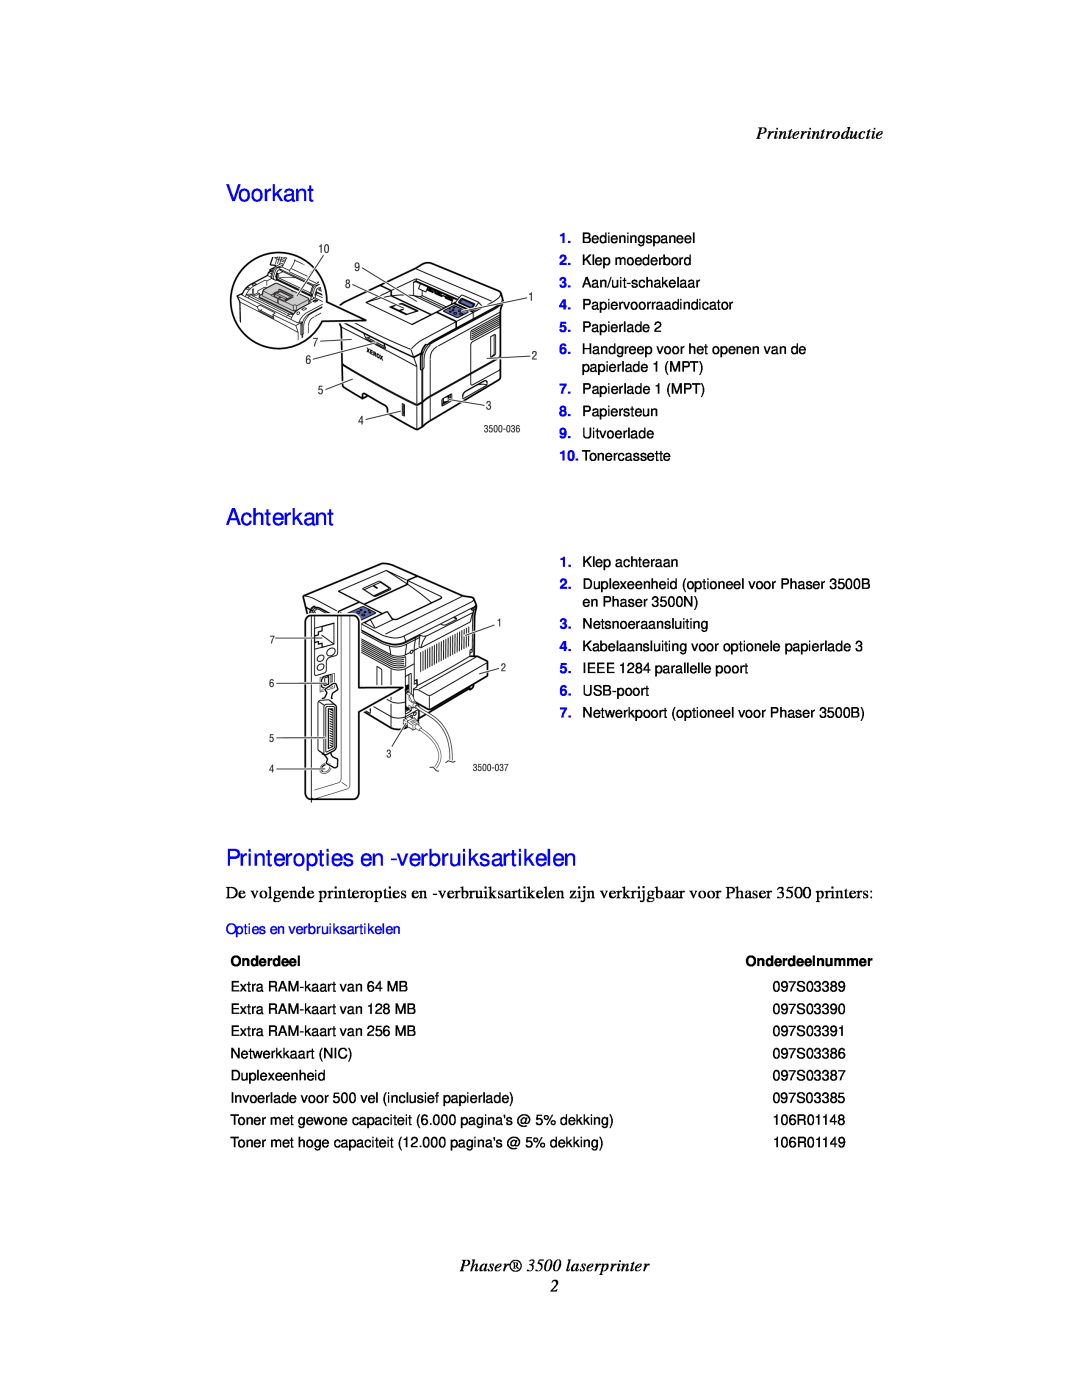 Xerox manual Voorkant, Achterkant, Printeropties en -verbruiksartikelen, Printerintroductie, Phaser 3500 laserprinter 